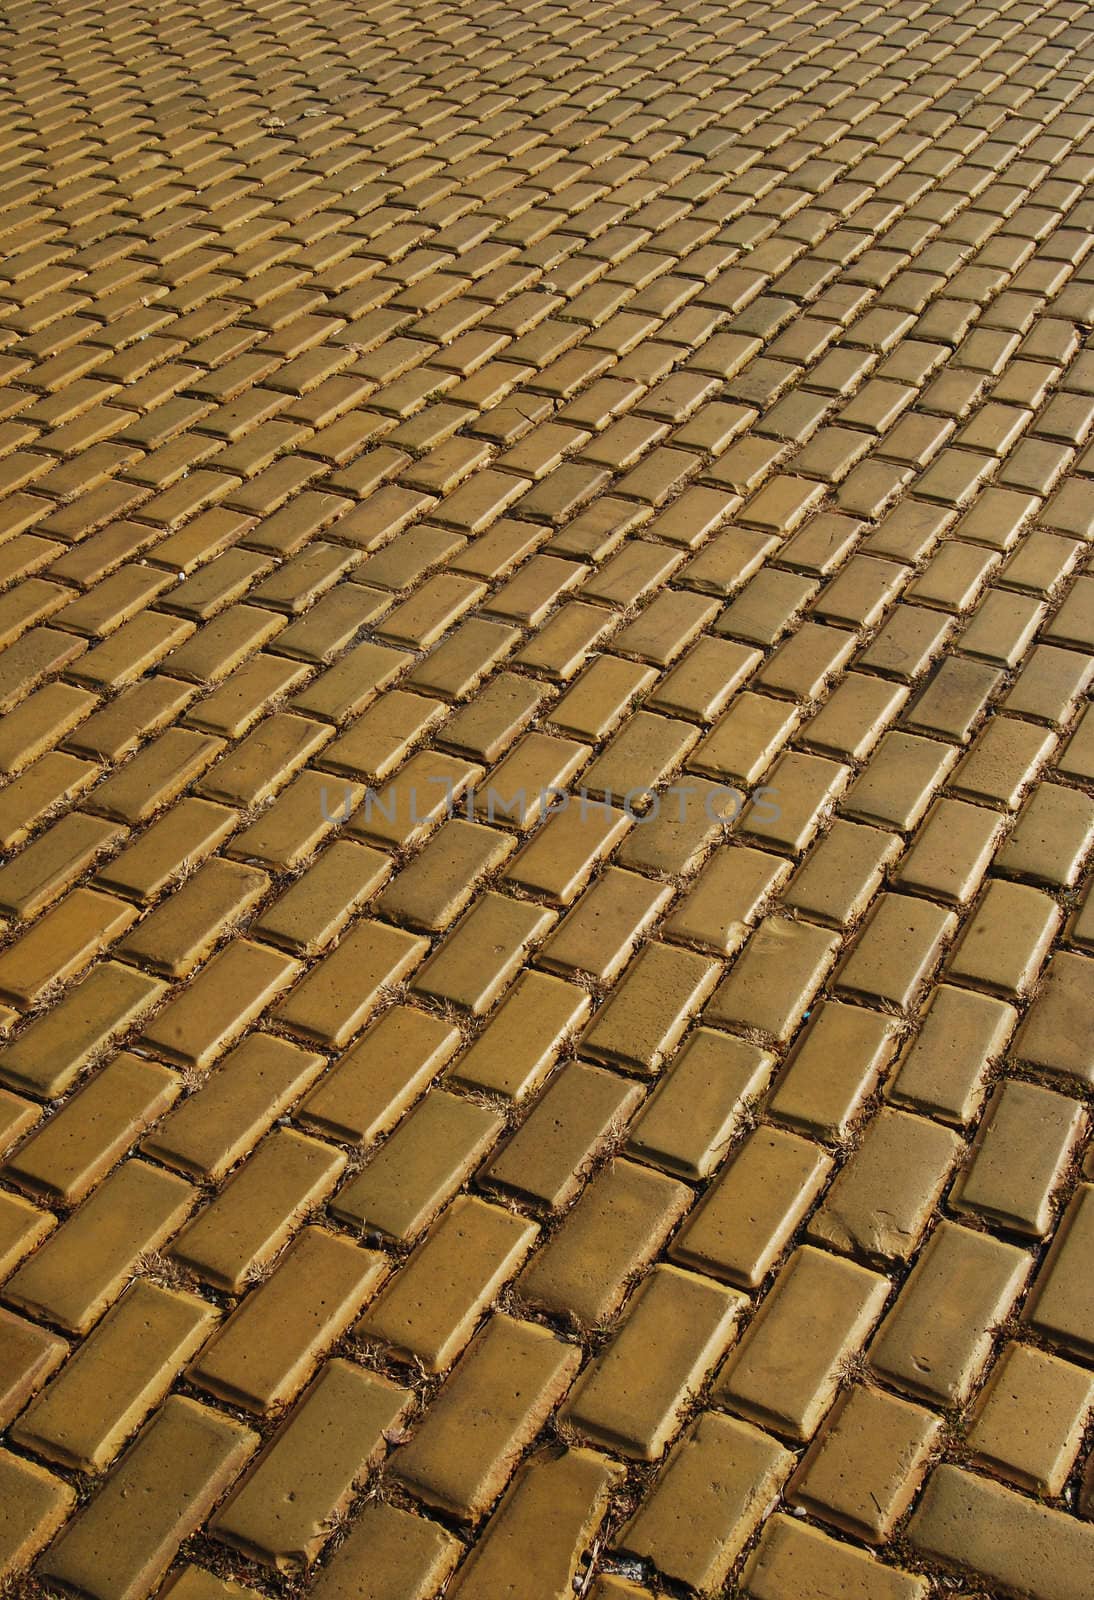 Yellow ceramic pavement by varbenov